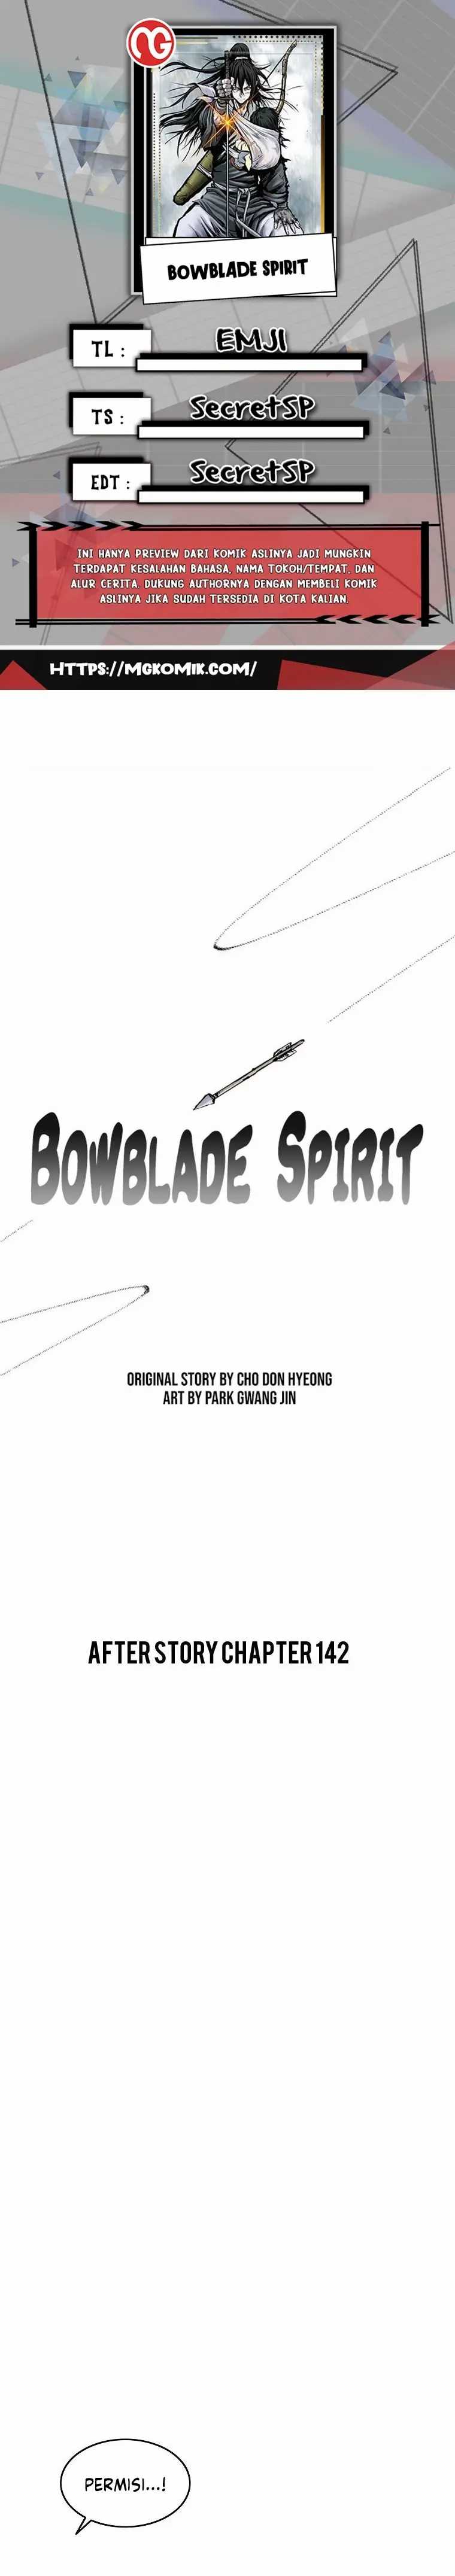 Bowblade Spirit Chapter 142